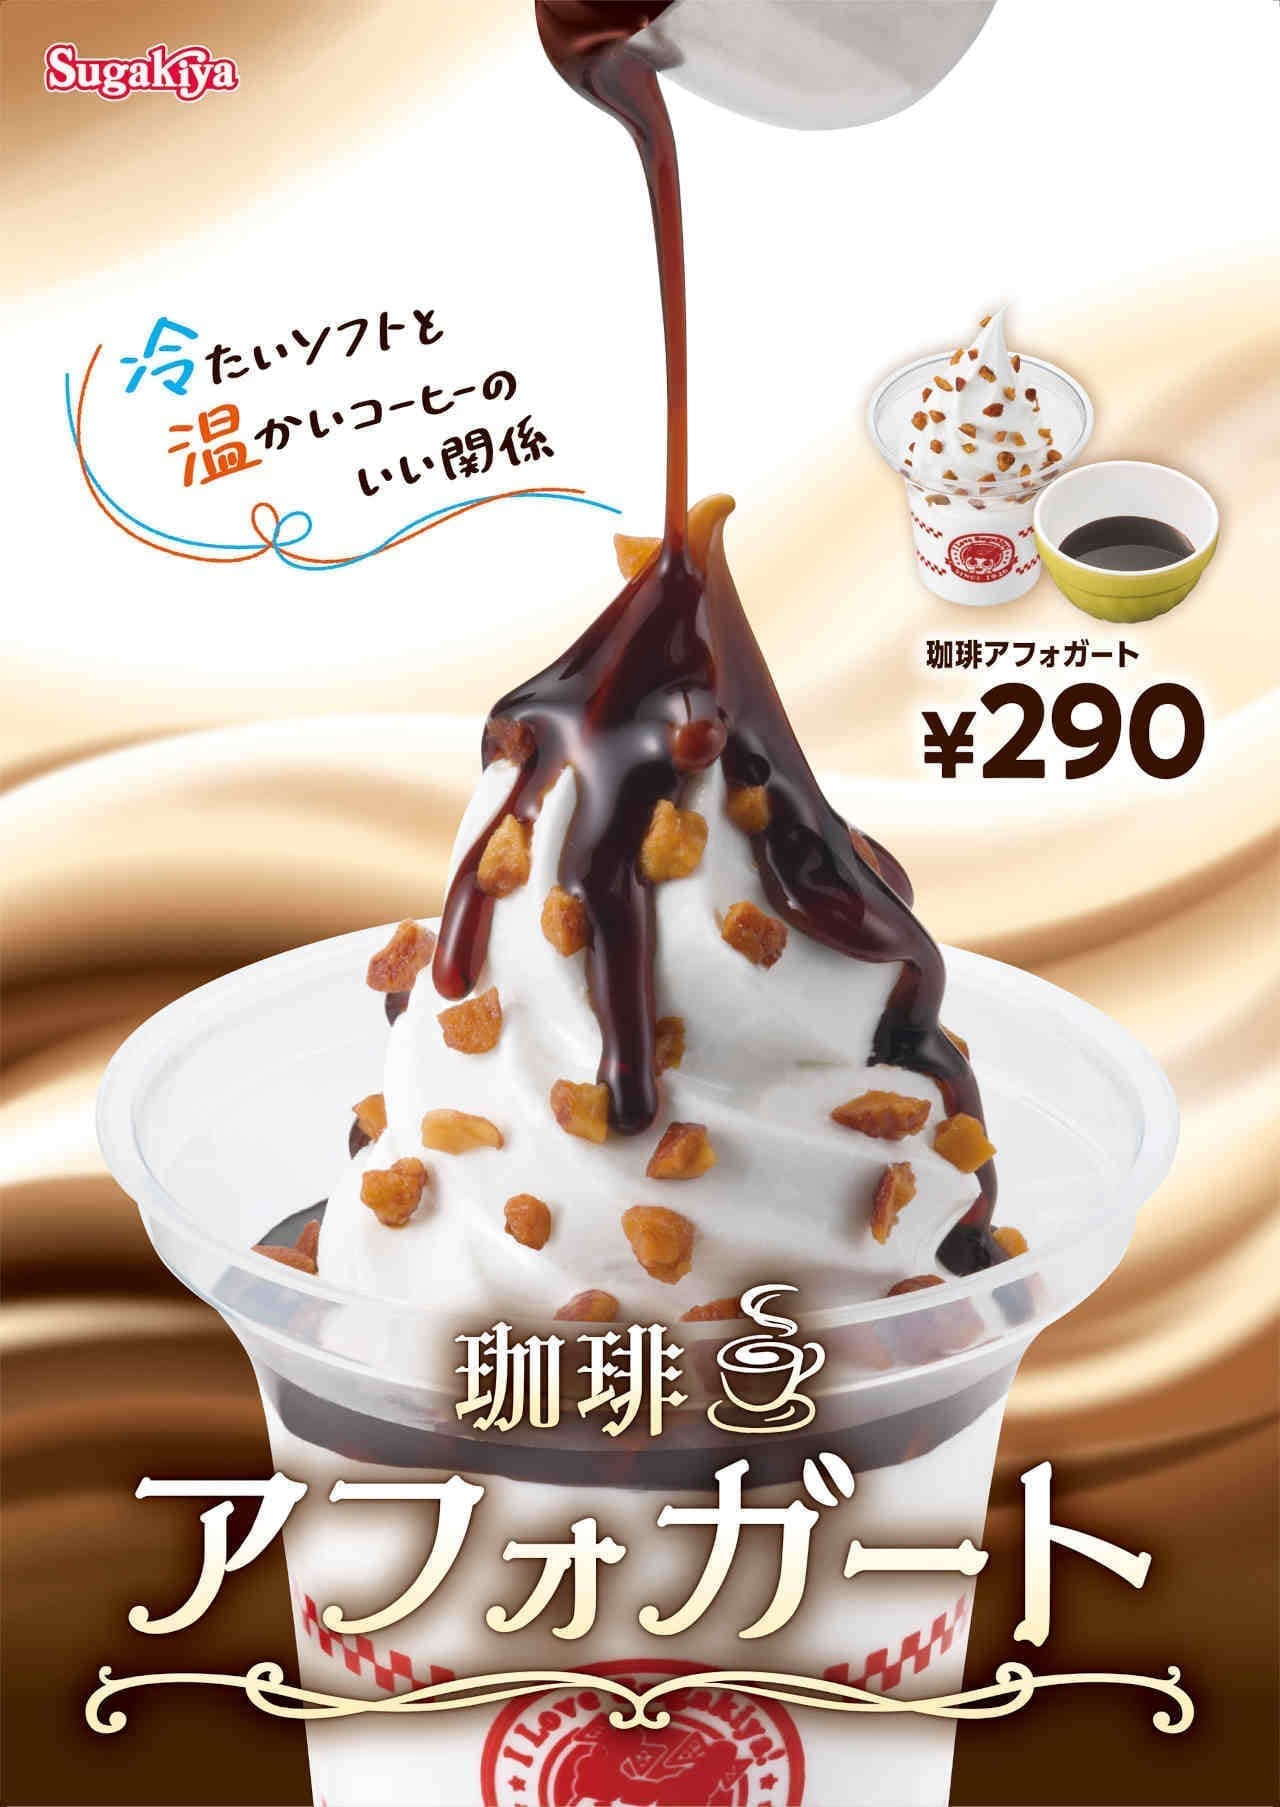 Sugakiya "Coffee Affogato